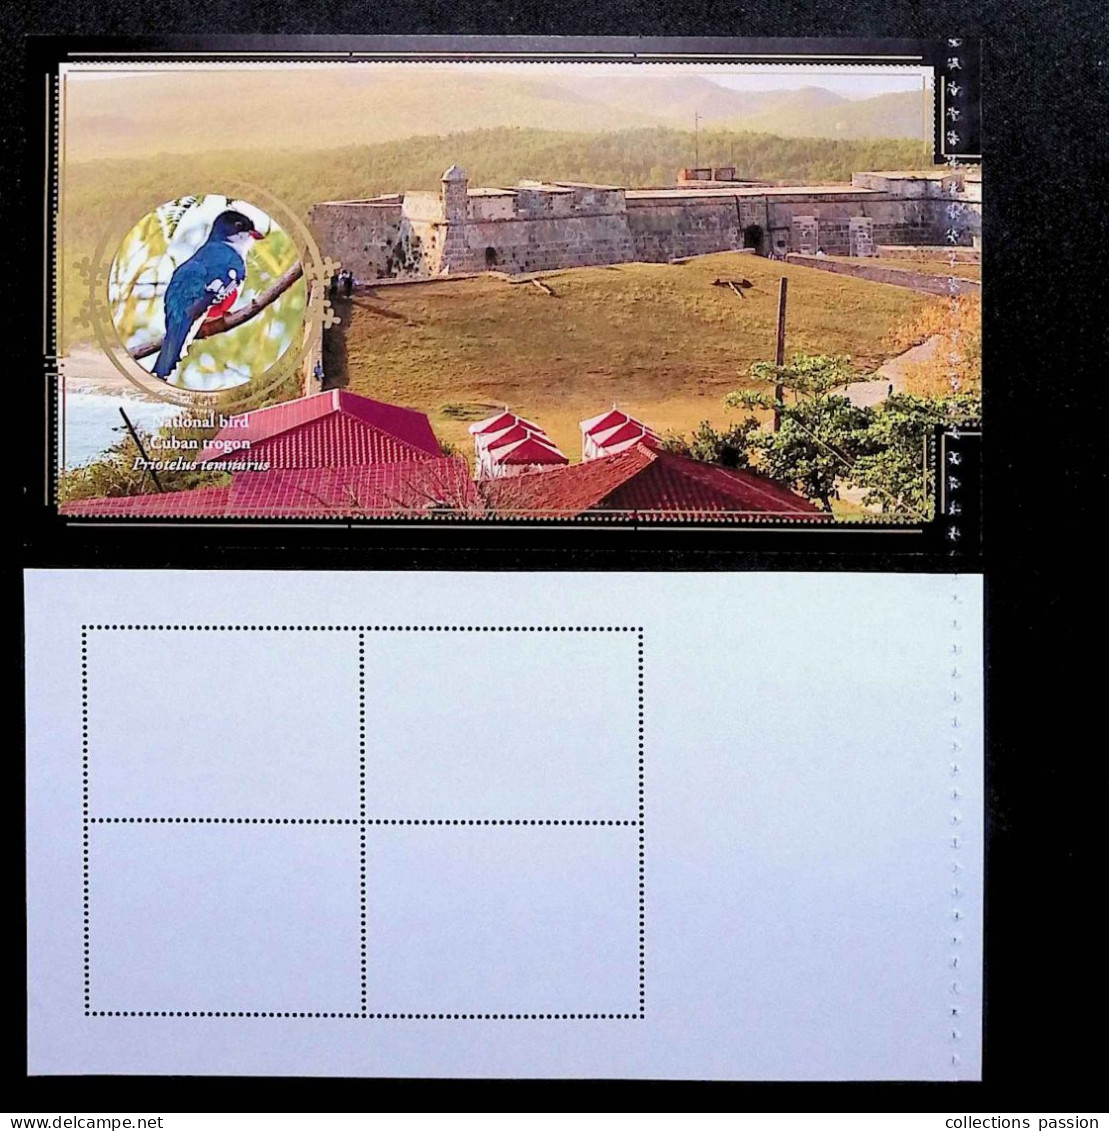 CL, Blocs-feuillets, Block, UN, United Nations, NY, New York, 2019, Cuba, World Heritage, Camagüey, Frais Fr 1.95 E - Unused Stamps